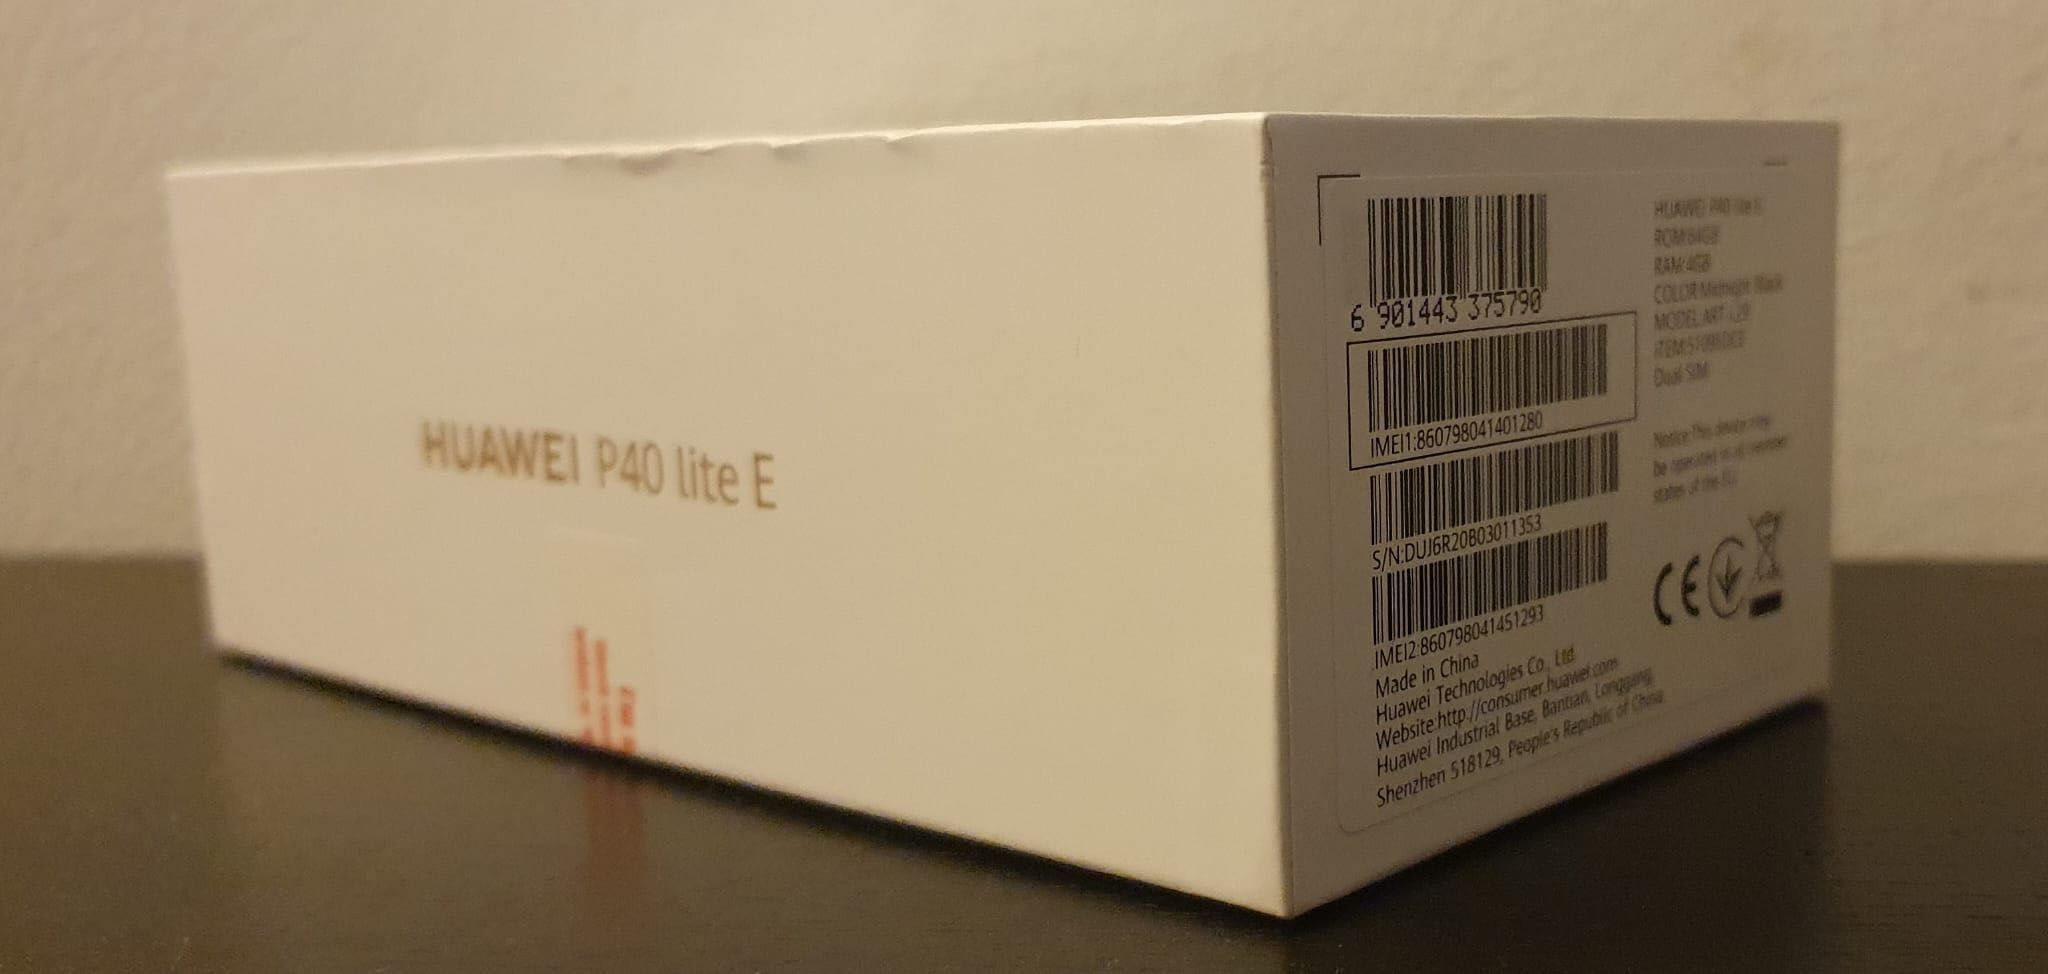 Unused and new Huawei P40 lite E. 100€